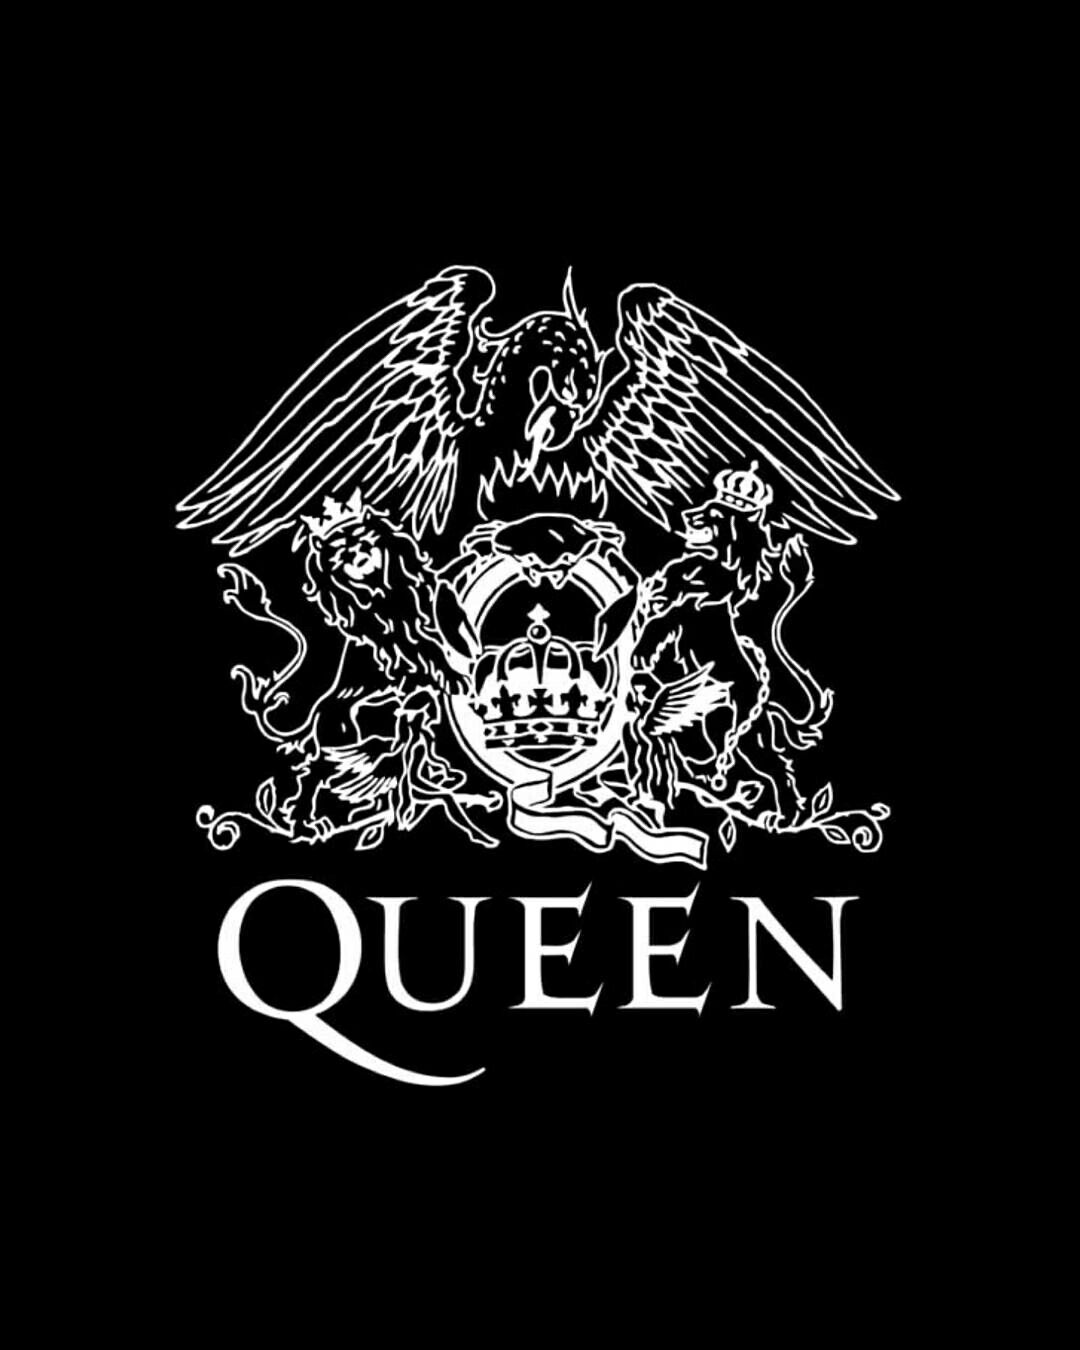 Queen Band Logo Wallpaper Free Queen Band Logo Background